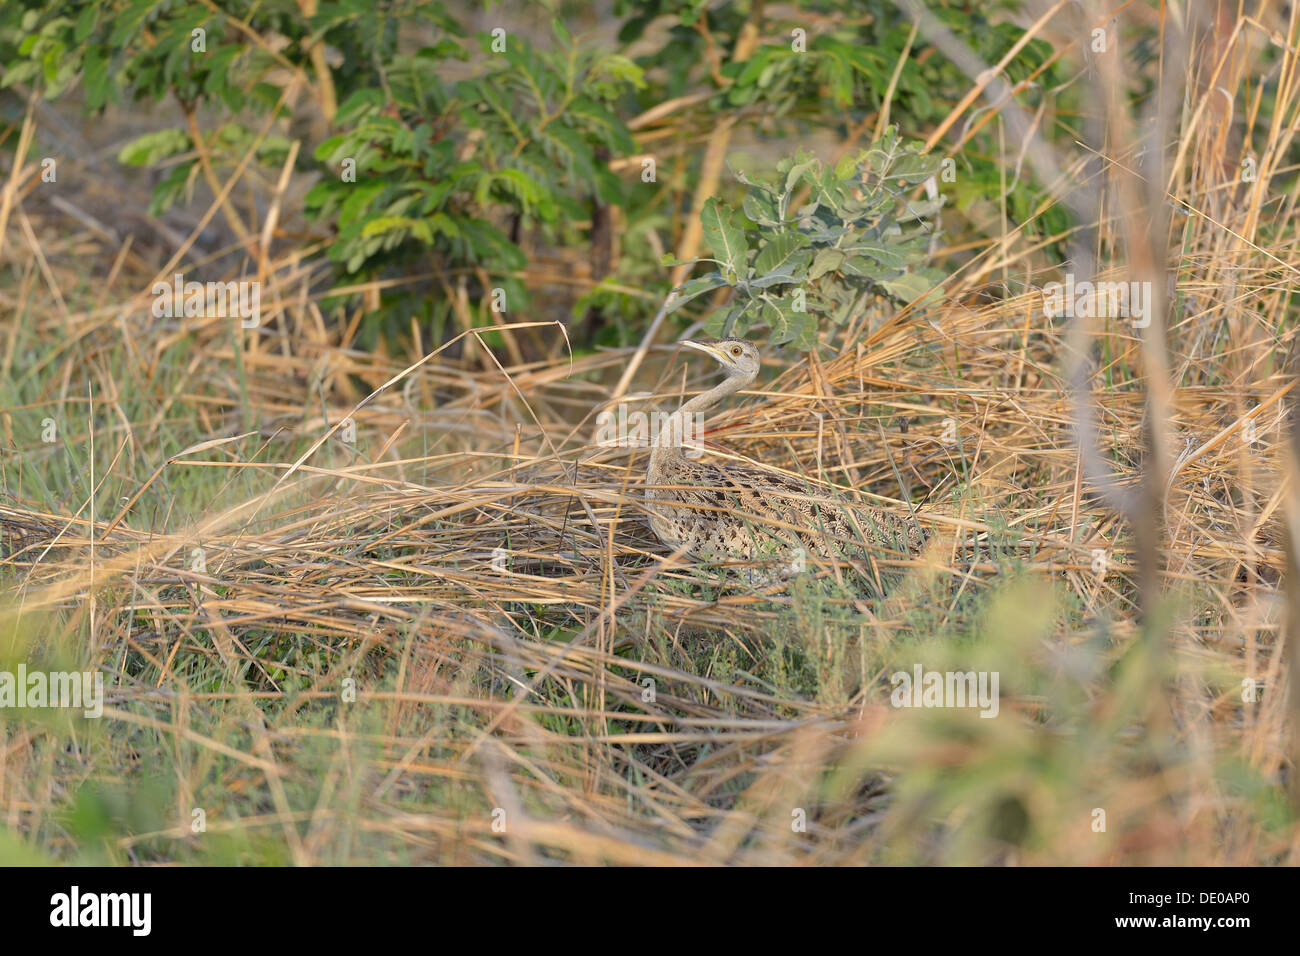 Black-bellied Bustard (Eupodotis melanogaster - Lissotis melanogaster) in tall grass Pendjari N P - Benin - West Africa Stock Photo